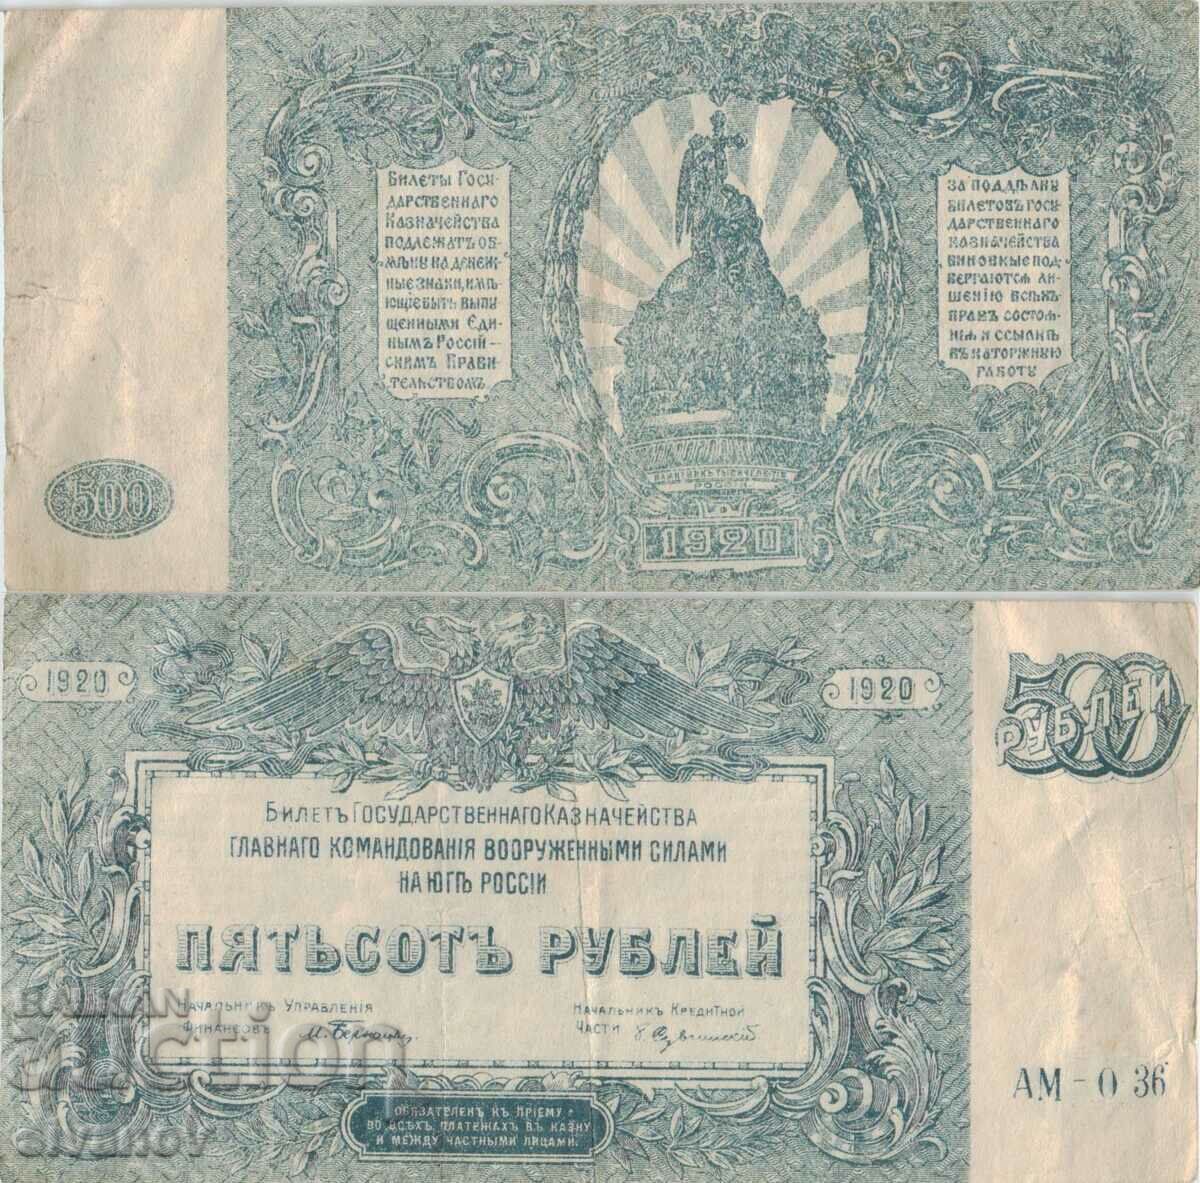 Rusia de Sud 500 de ruble 1920 #4919